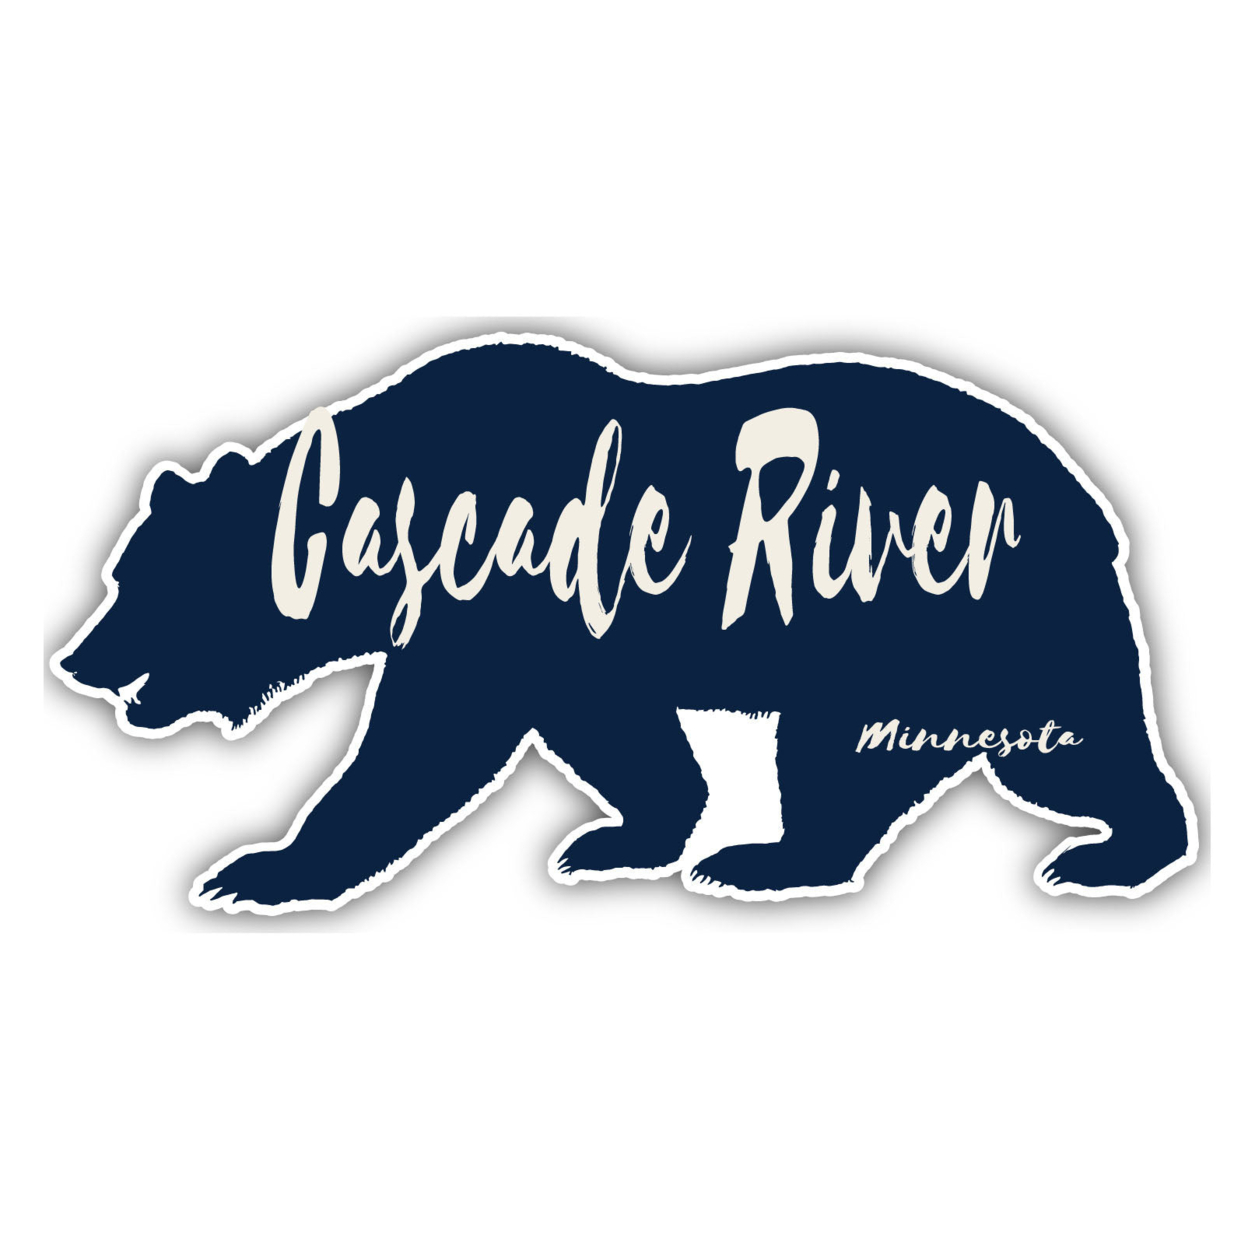 Cascade River Minnesota Souvenir Decorative Stickers (Choose Theme And Size) - Single Unit, 6-Inch, Bear